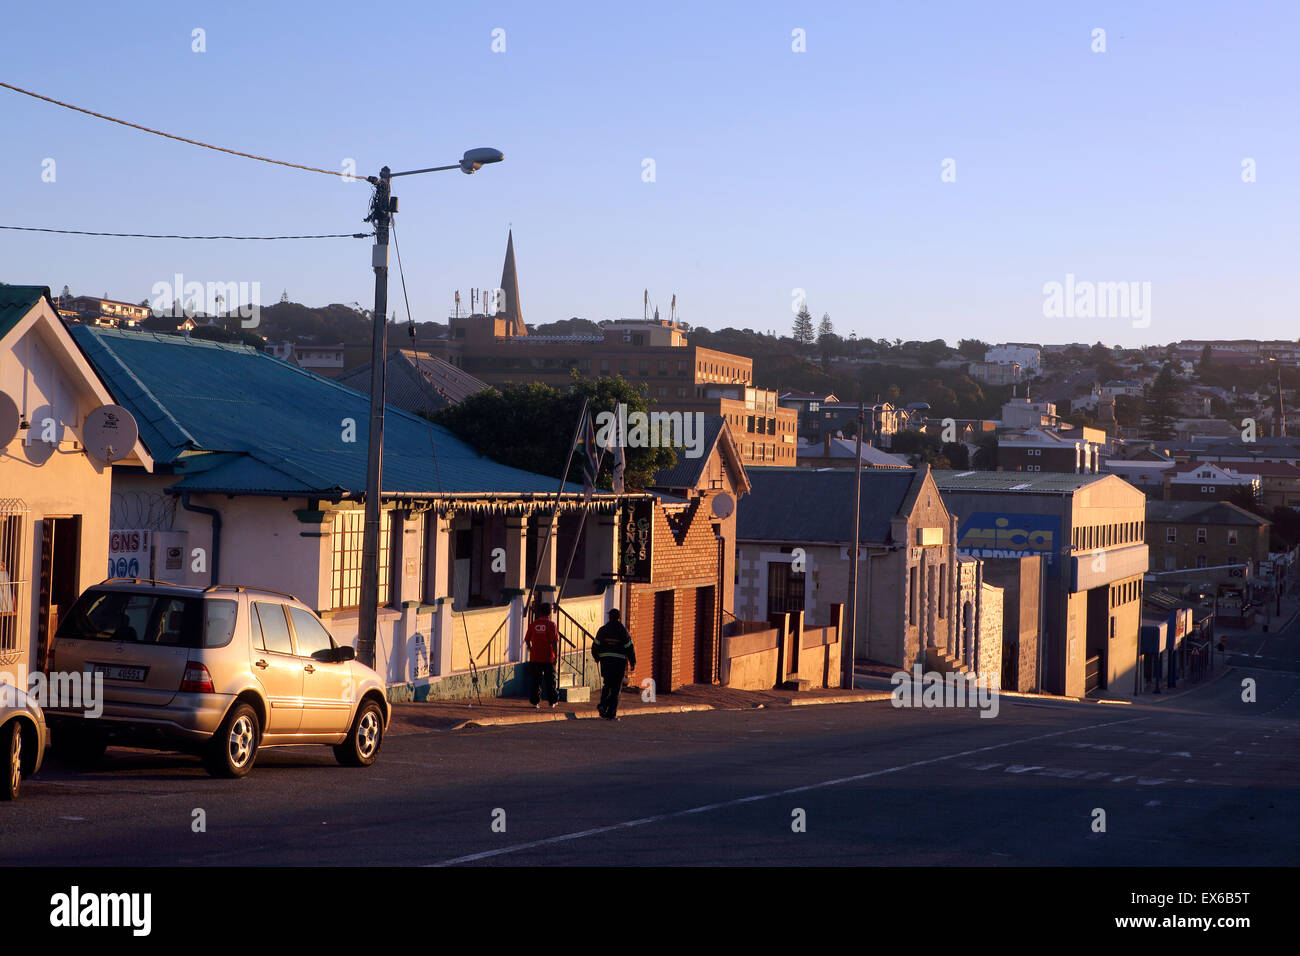 Am späten Nachmittag in Mossel Bay, Südafrika Stockfoto